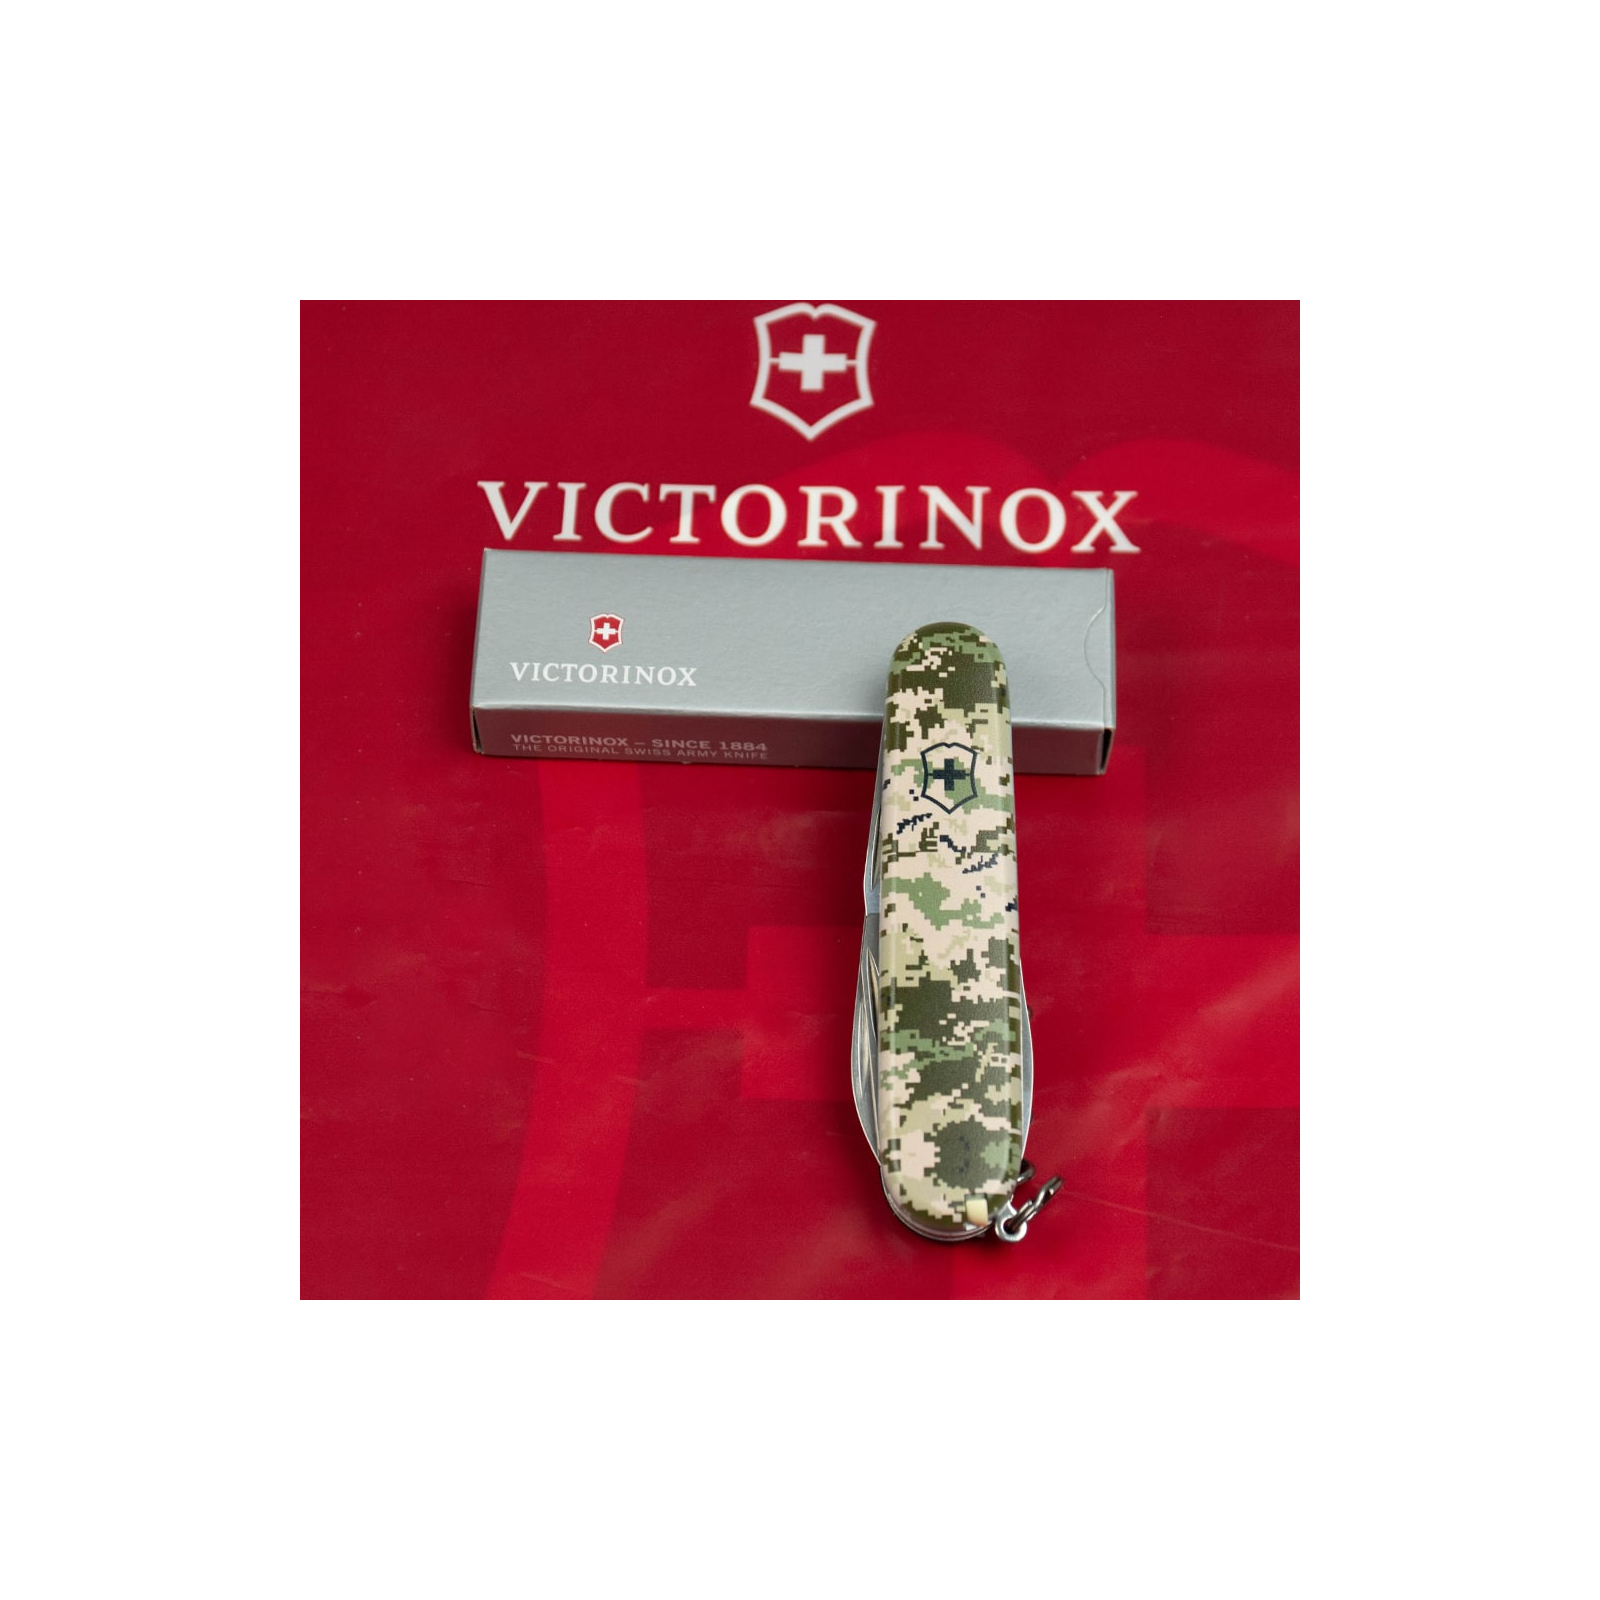 Нож Victorinox Spartan Army 91 мм Літак + Емблема ПС ЗСУ (1.3603.3_W3040p) изображение 12